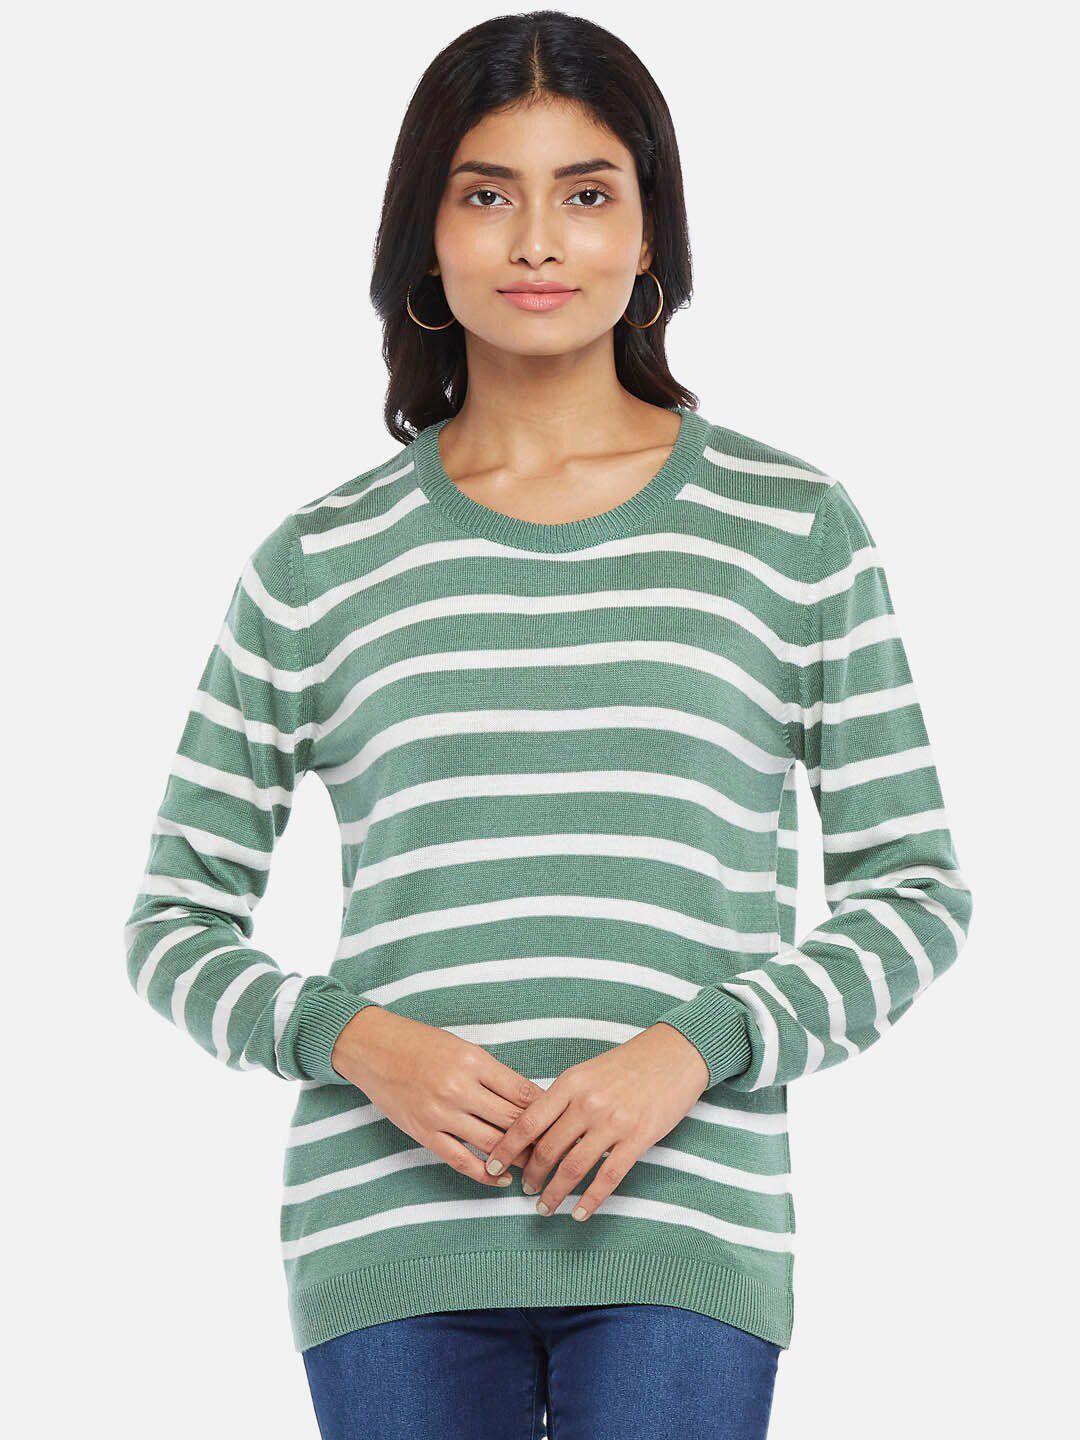 honey by pantaloons women green striped sweatshirt